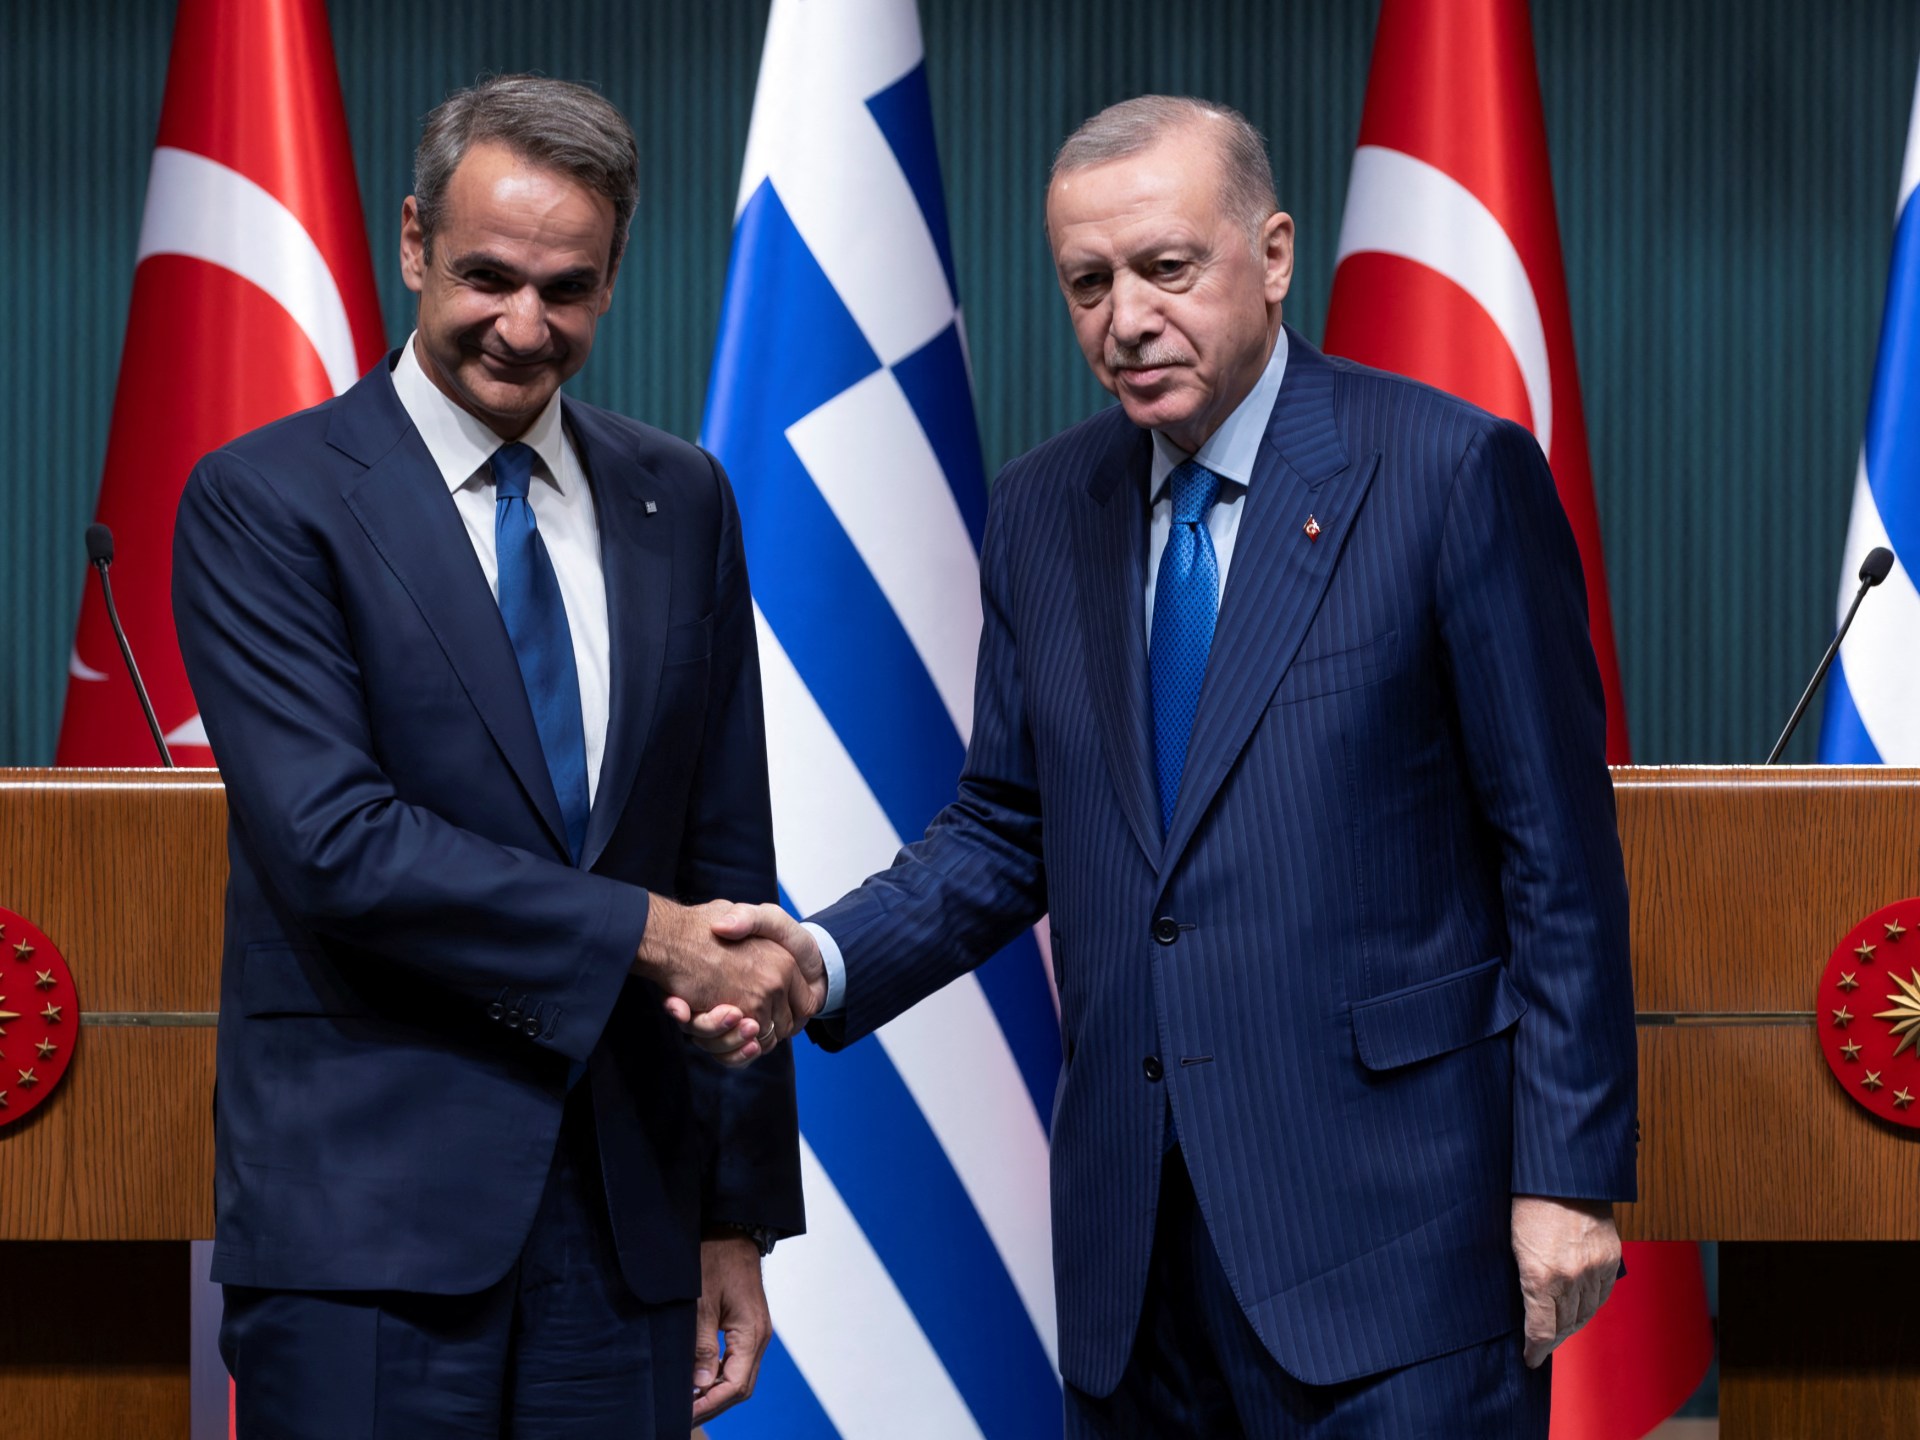 Turkeys Erdogan meets Greek PM, sees no unsolvable problems in ties | Israel War on Gaza News [Video]